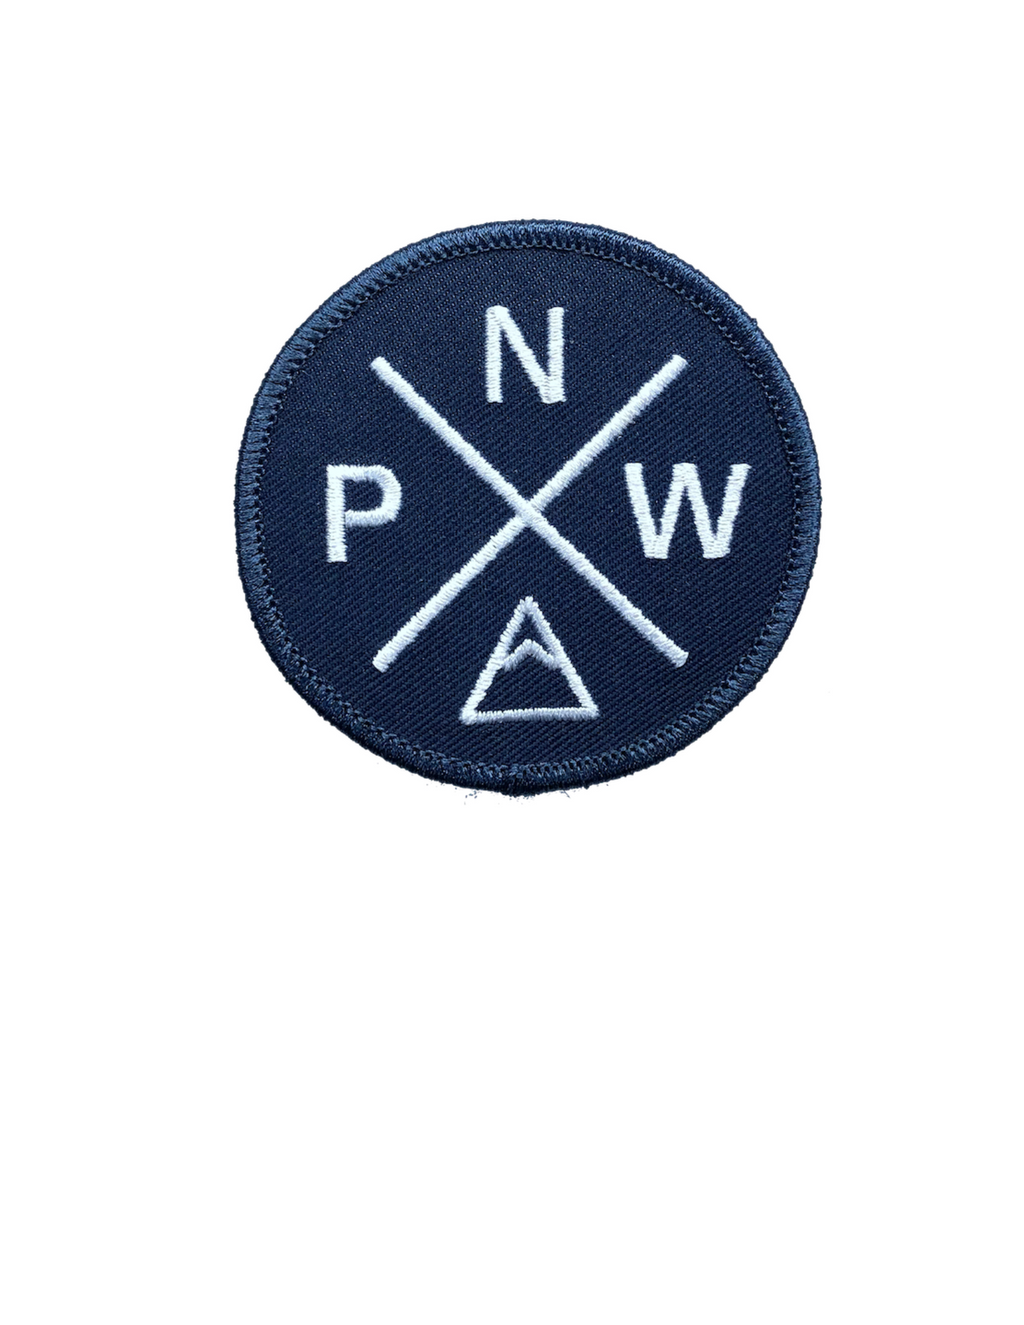 PNW Patch Navy